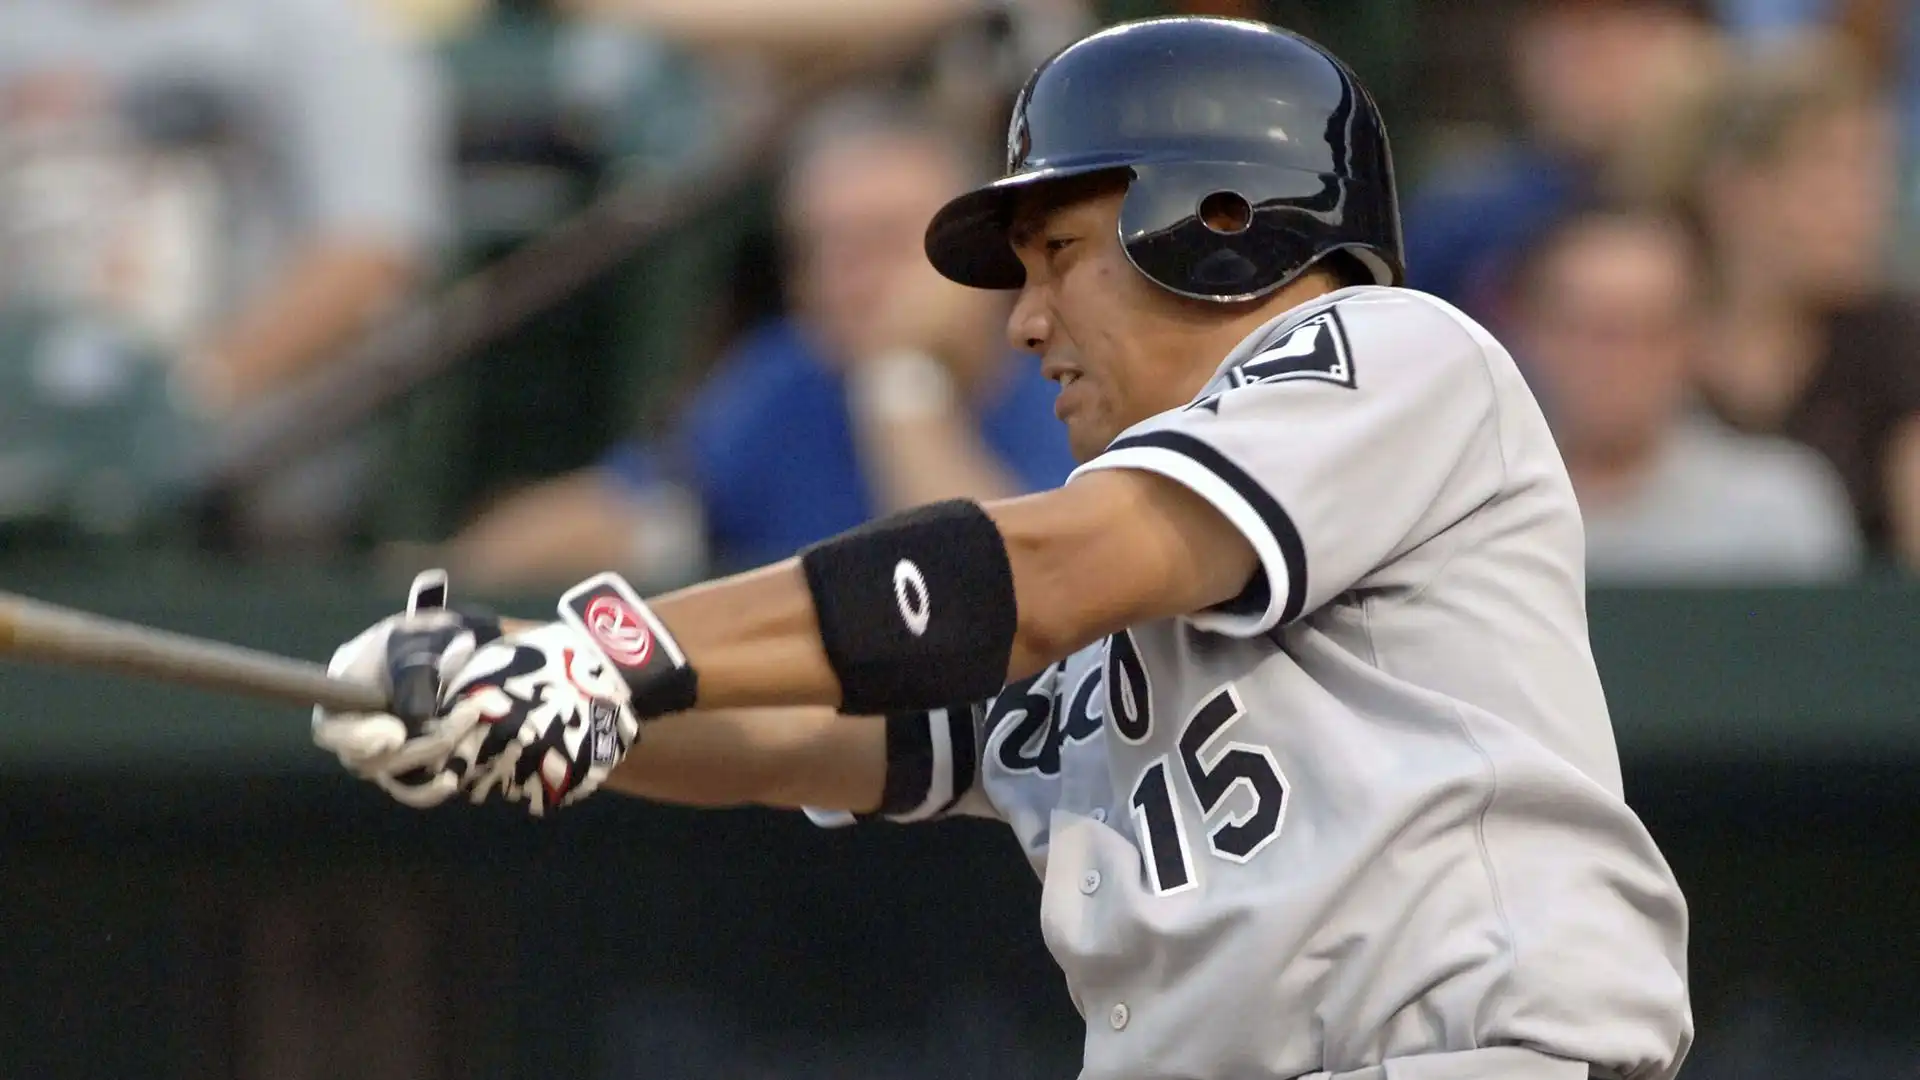 Iguchi ha giocato in MLB dal 2005 al 2008 con i Chicago White Sox, i Philadelphia Phillies e i San Diego Padres